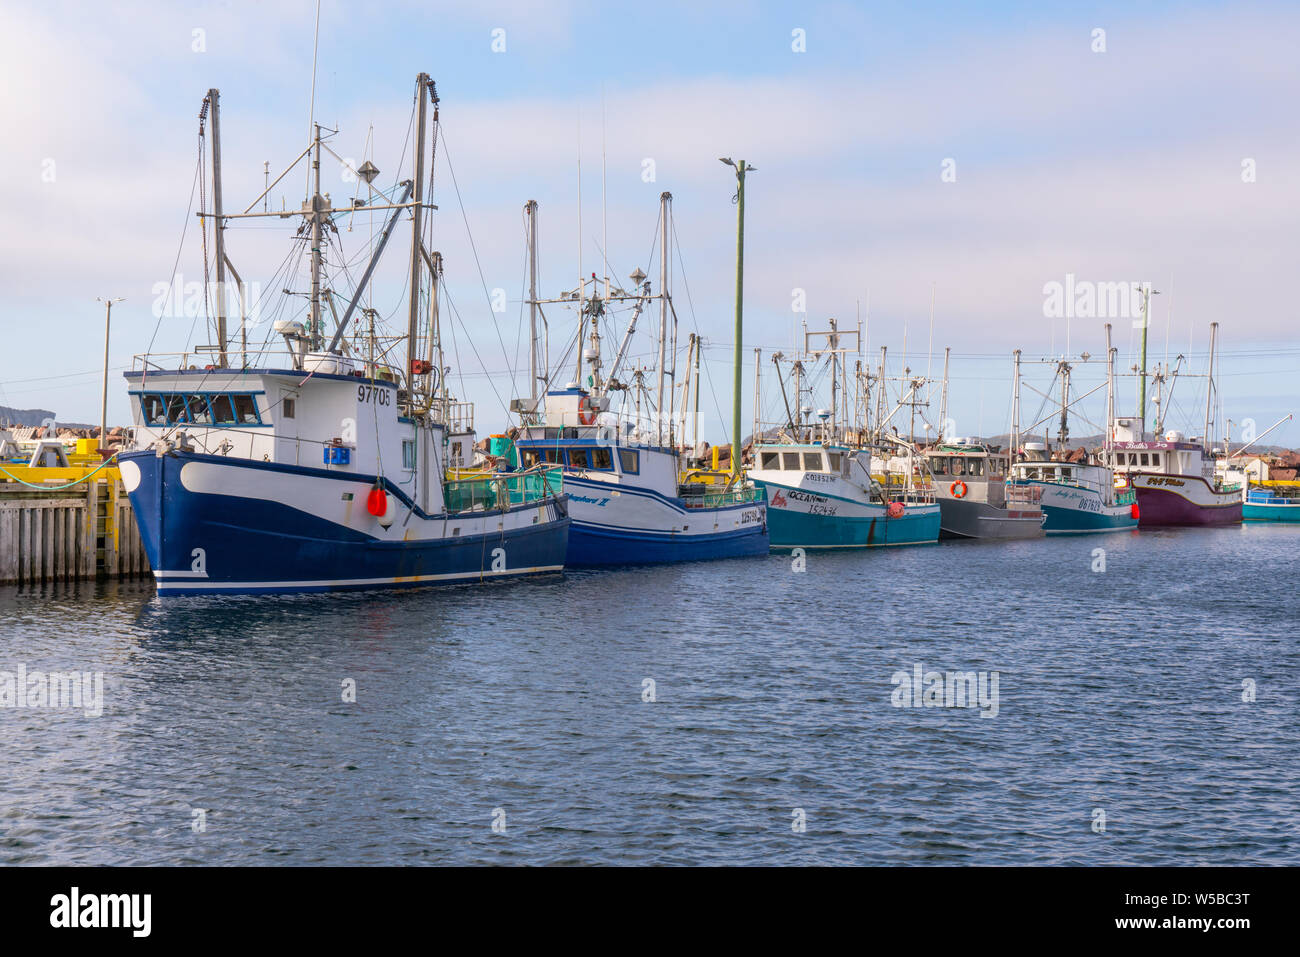 Twillingate, Newfoundland - June 13, 2019: Fishing boats lined up along the dock in the harbor of Twillingate, Newfoundland, Canada Stock Photo